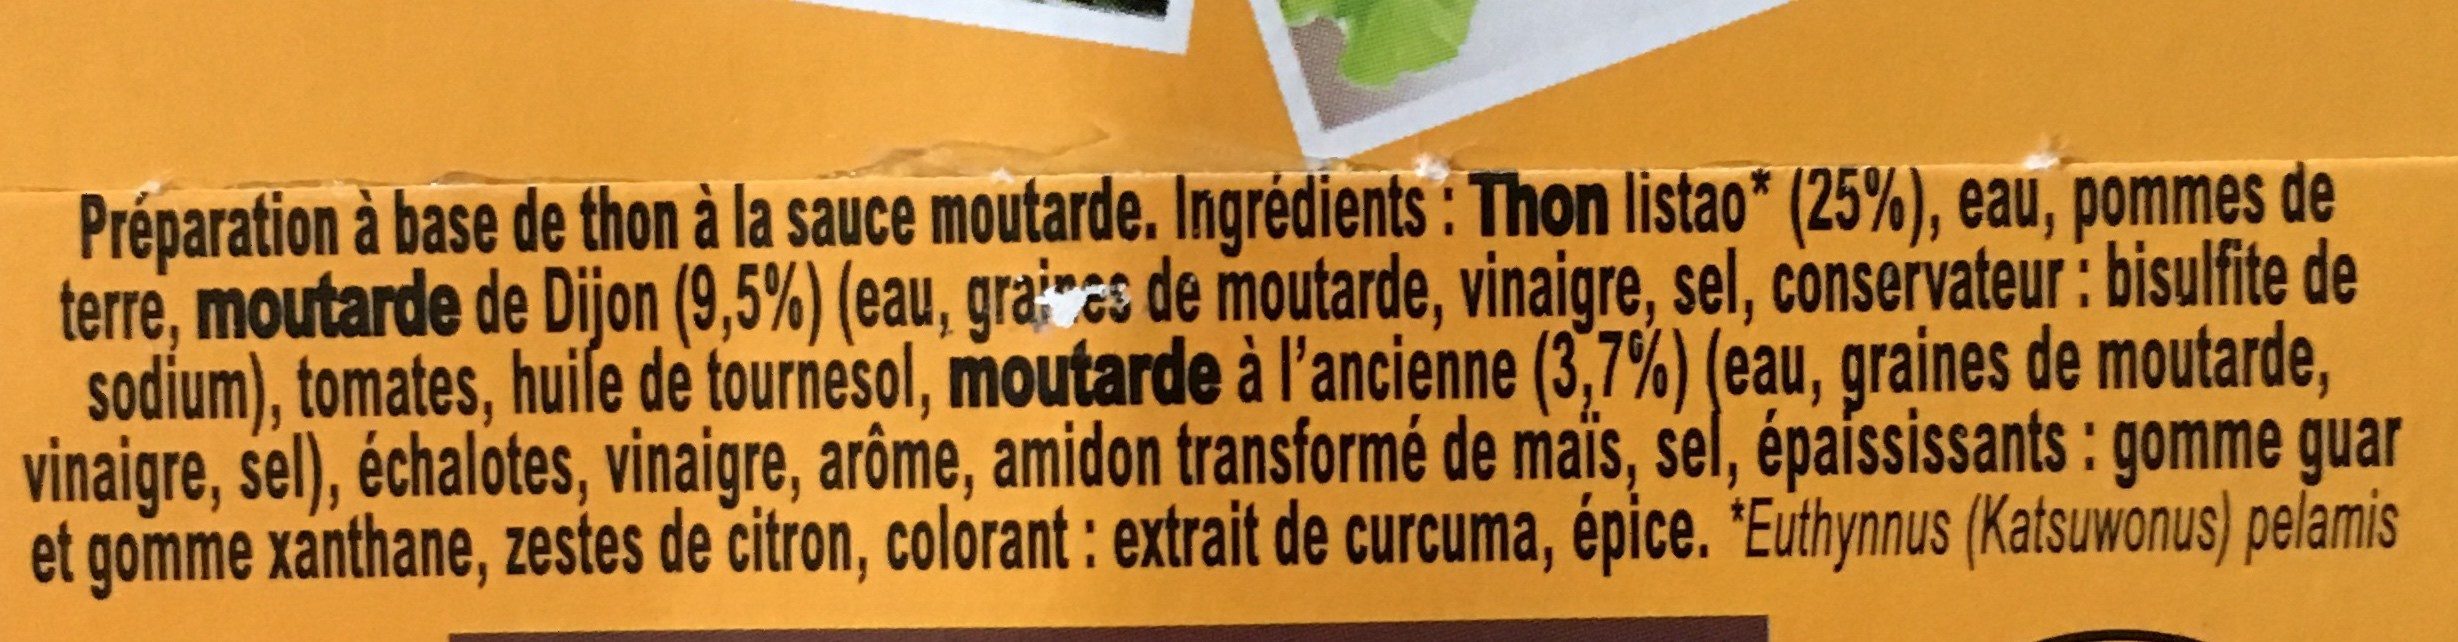 Thon sauce moutarde - 原材料 - fr